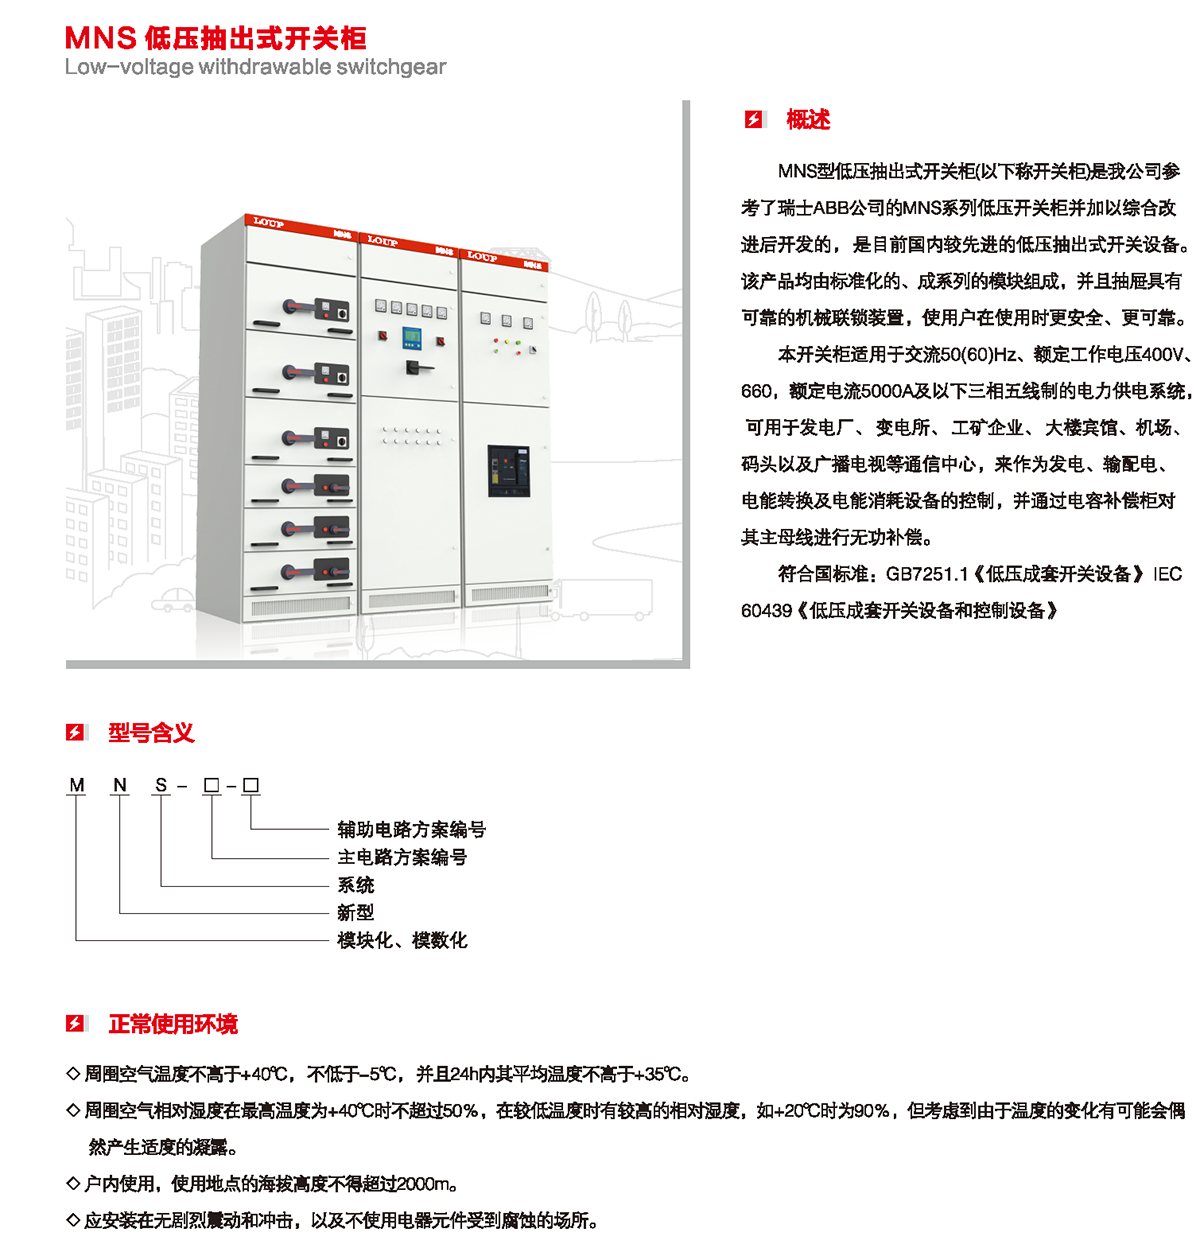 MNS低压抽出式开关柜概述、型号含义、正常使用环境